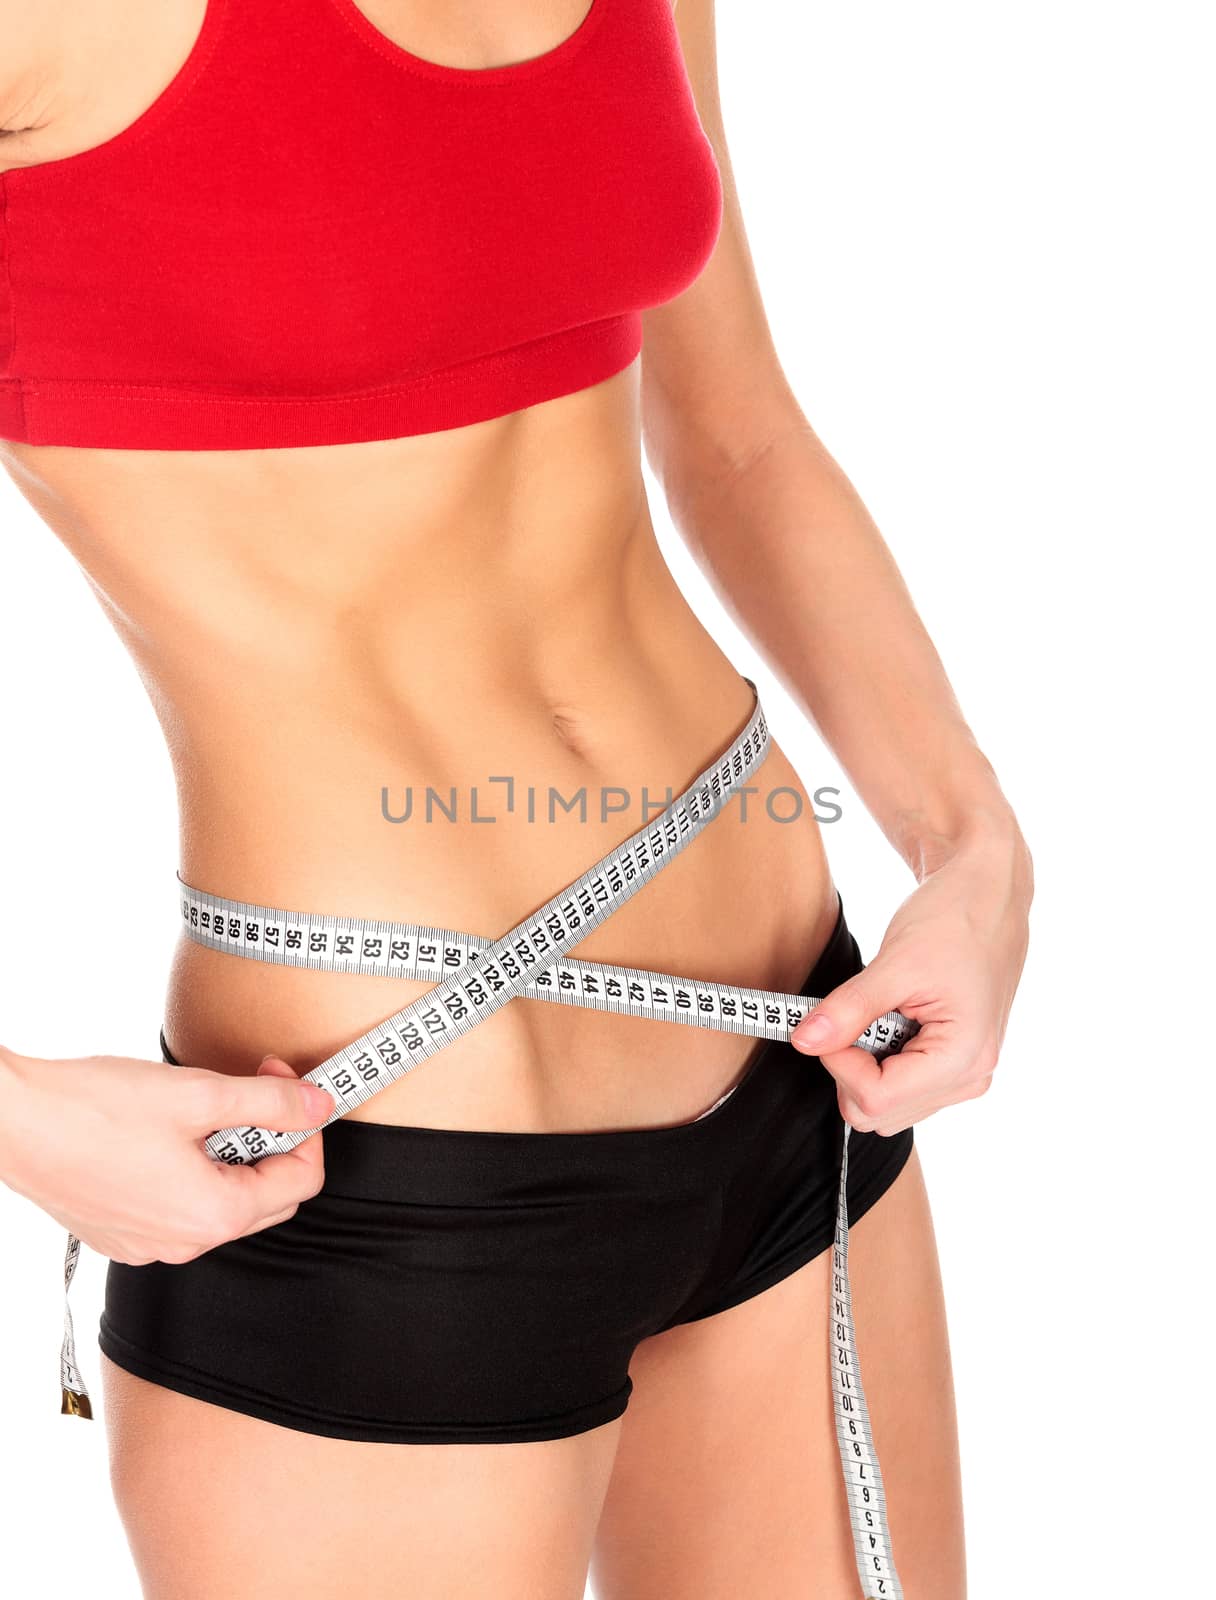 Slim woman measures her waistline by Nobilior